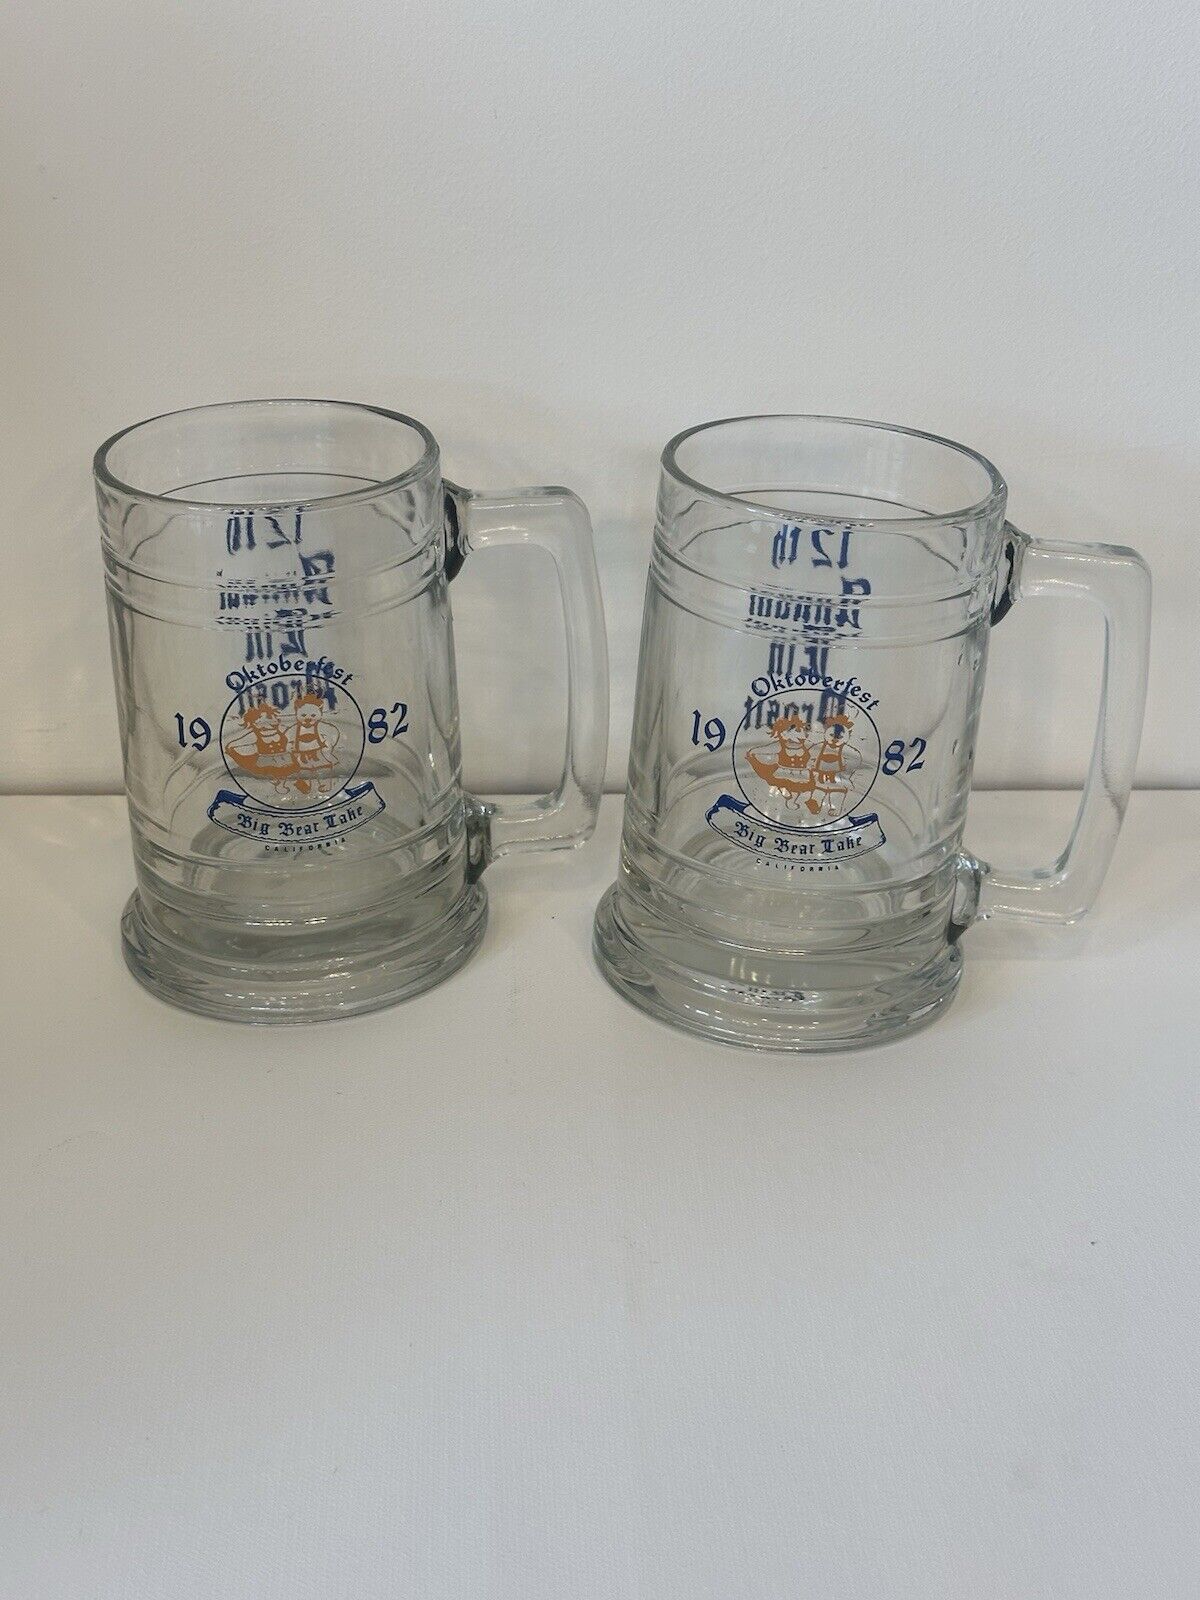 VTG Octoberfest Big Bear Lake California 1982 Set Of 2 Glass Mugs